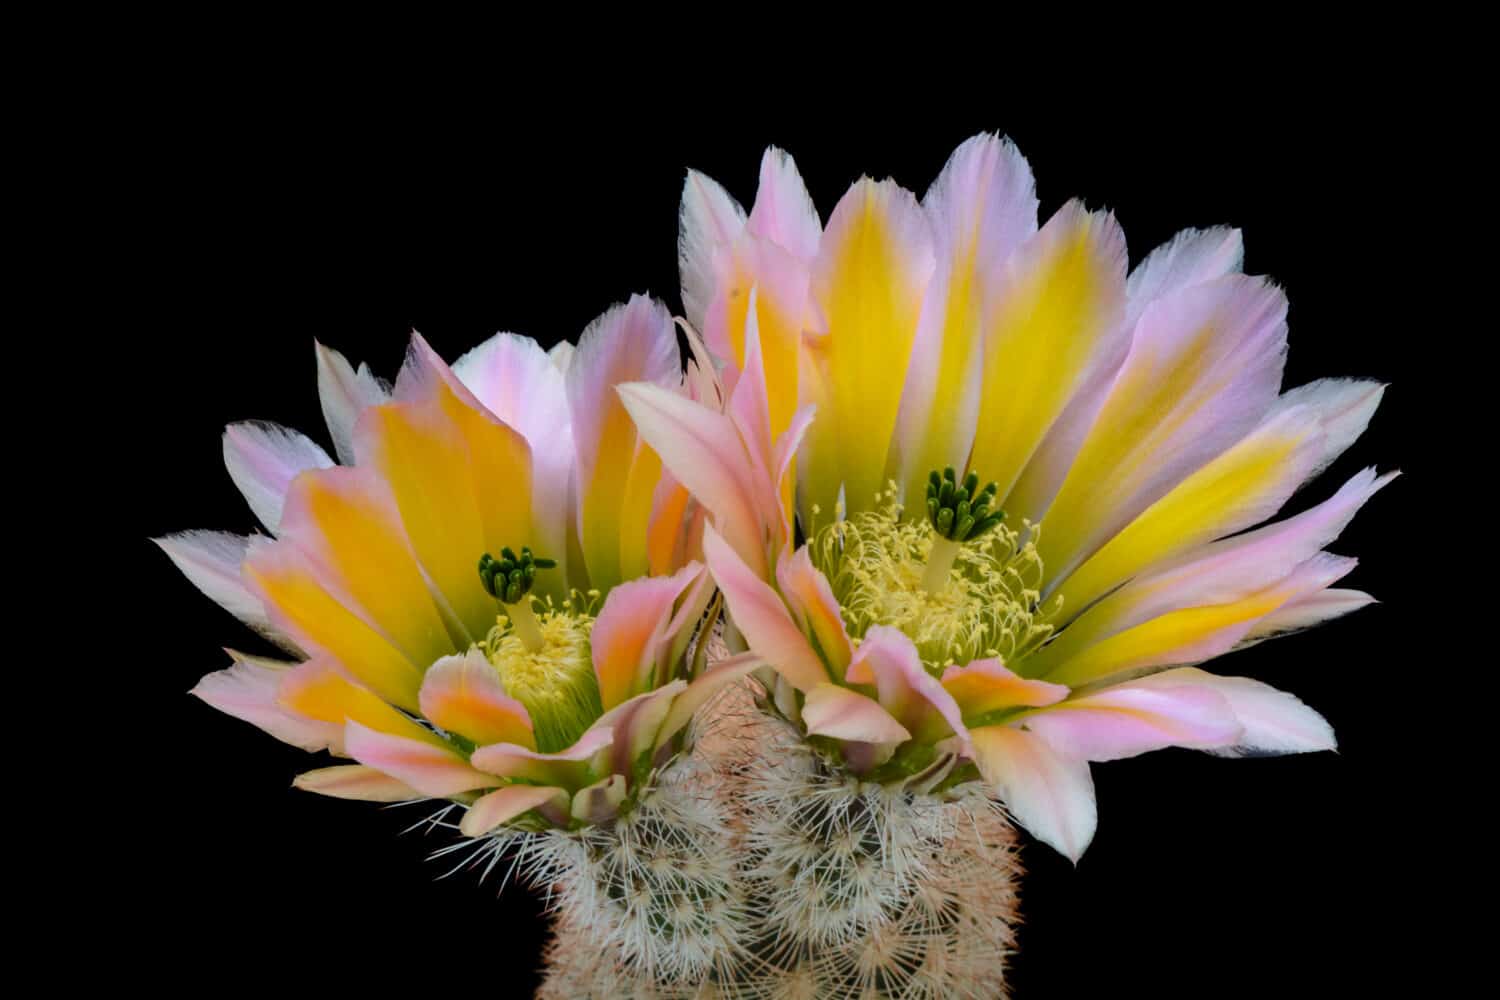 Cactus Echinocereus dasyacanthus with flower isolated on Black